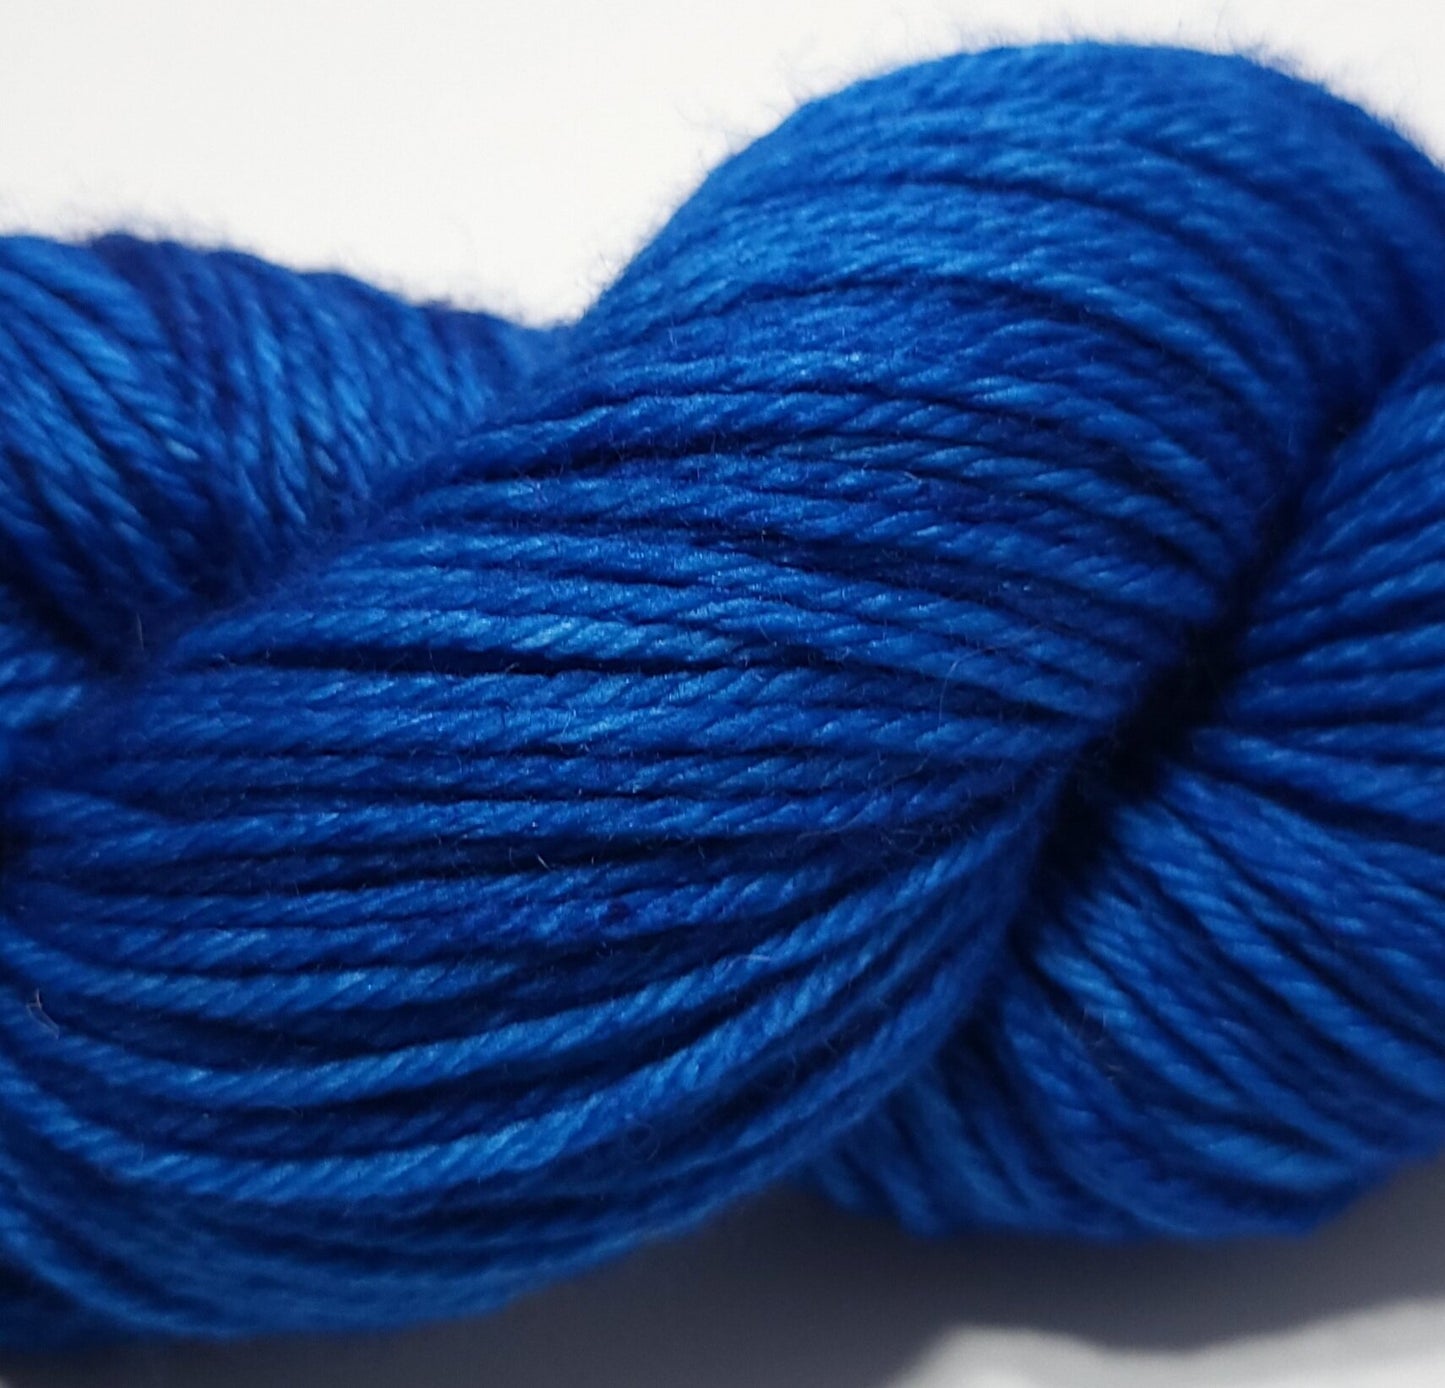 Pictsie Blue - 100% Merino